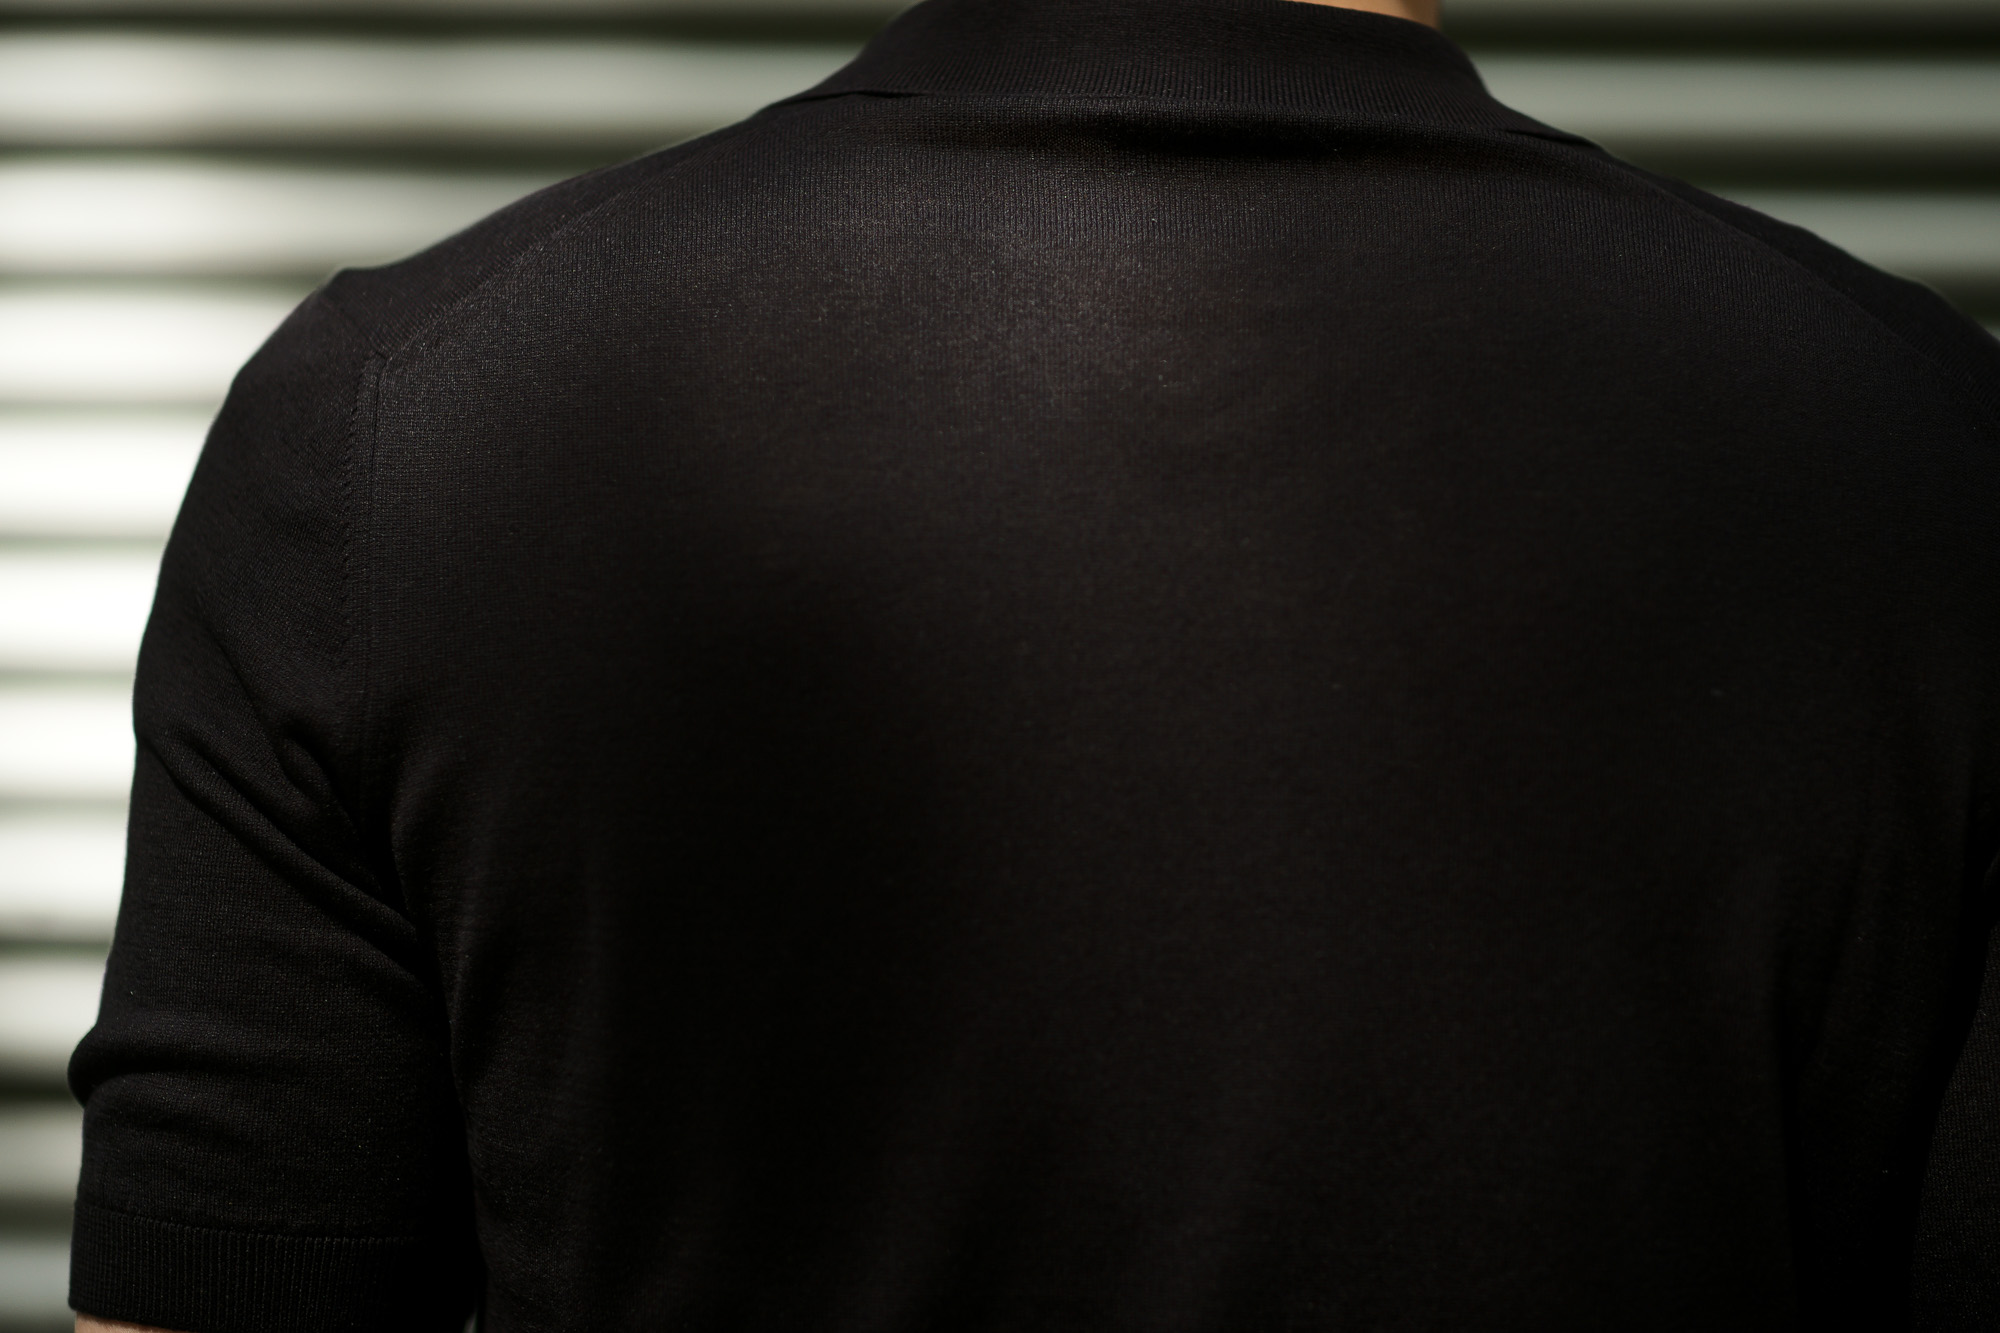 Gran Sasso (グランサッソ) Silk Knit Polo Shirt (シルクニットポロシャツ) SETA (シルク 100%) シルク ニット ポロシャツ BLACK (ブラック・099) made in italy (イタリア製) 2020 春夏新作  愛知 名古屋 altoediritto アルトエデリット